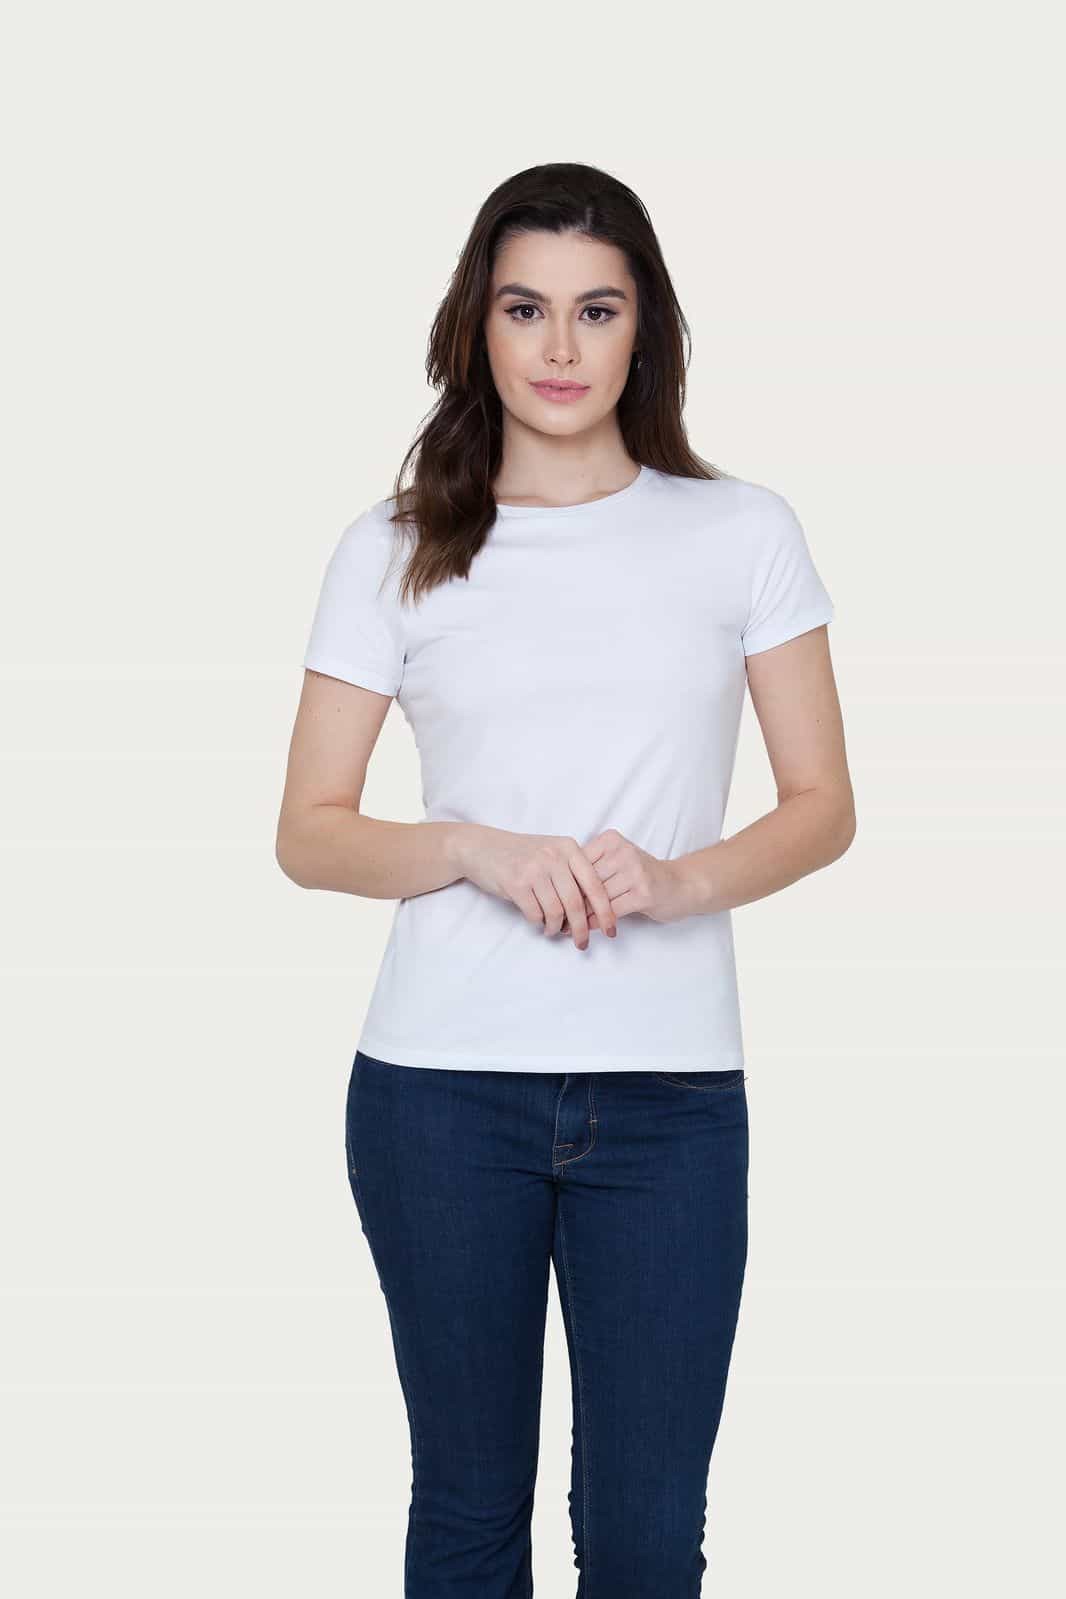 Camiseta Básica Feminina Algodão Premium Slim Fit Decote Redondo Branca -  W.Shirt